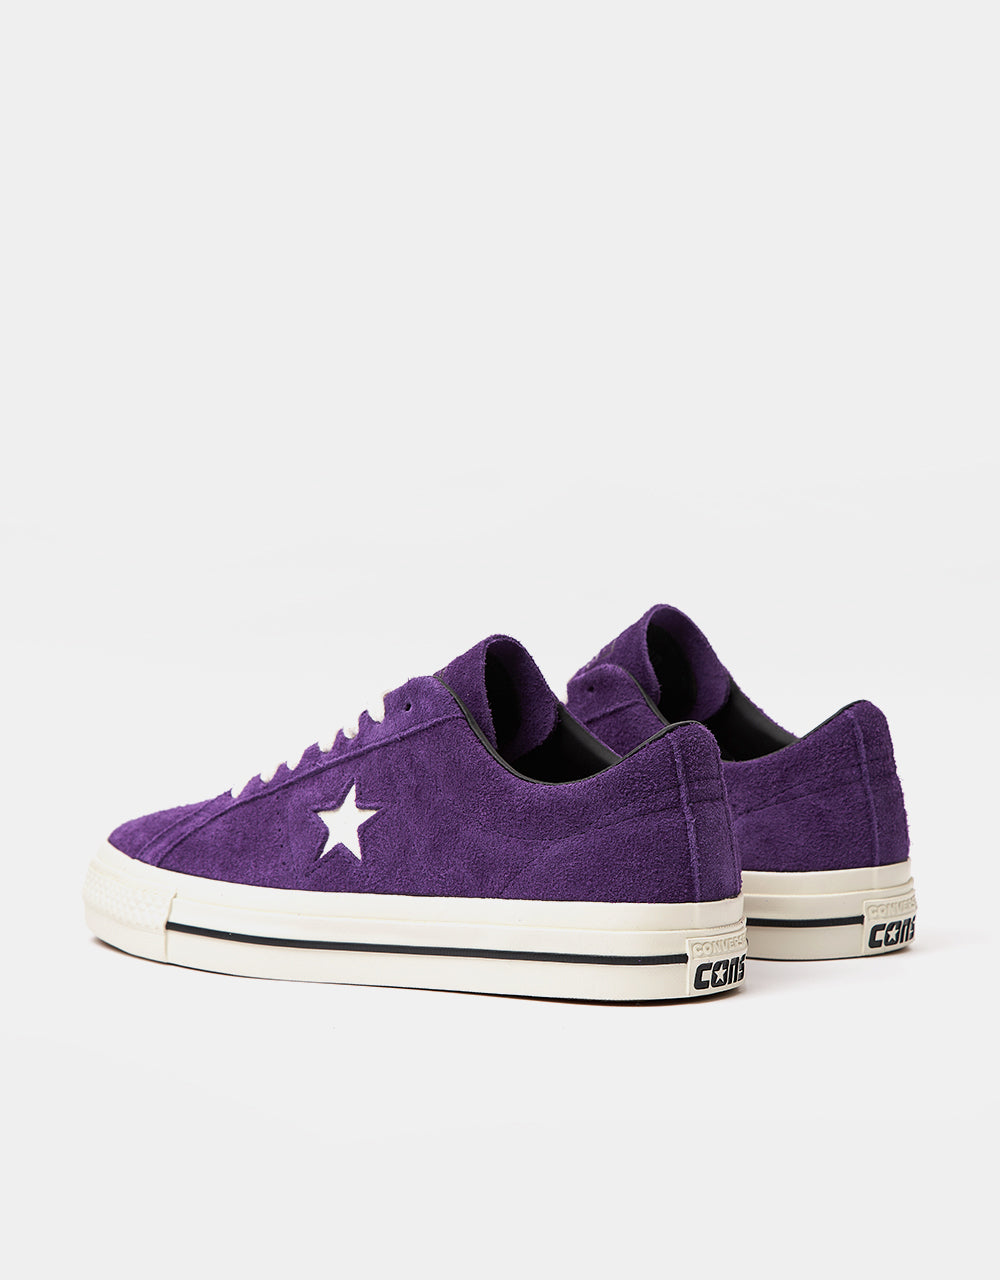 Converse One Star Pro Skate Shoes - Night Purple/Egret/Black